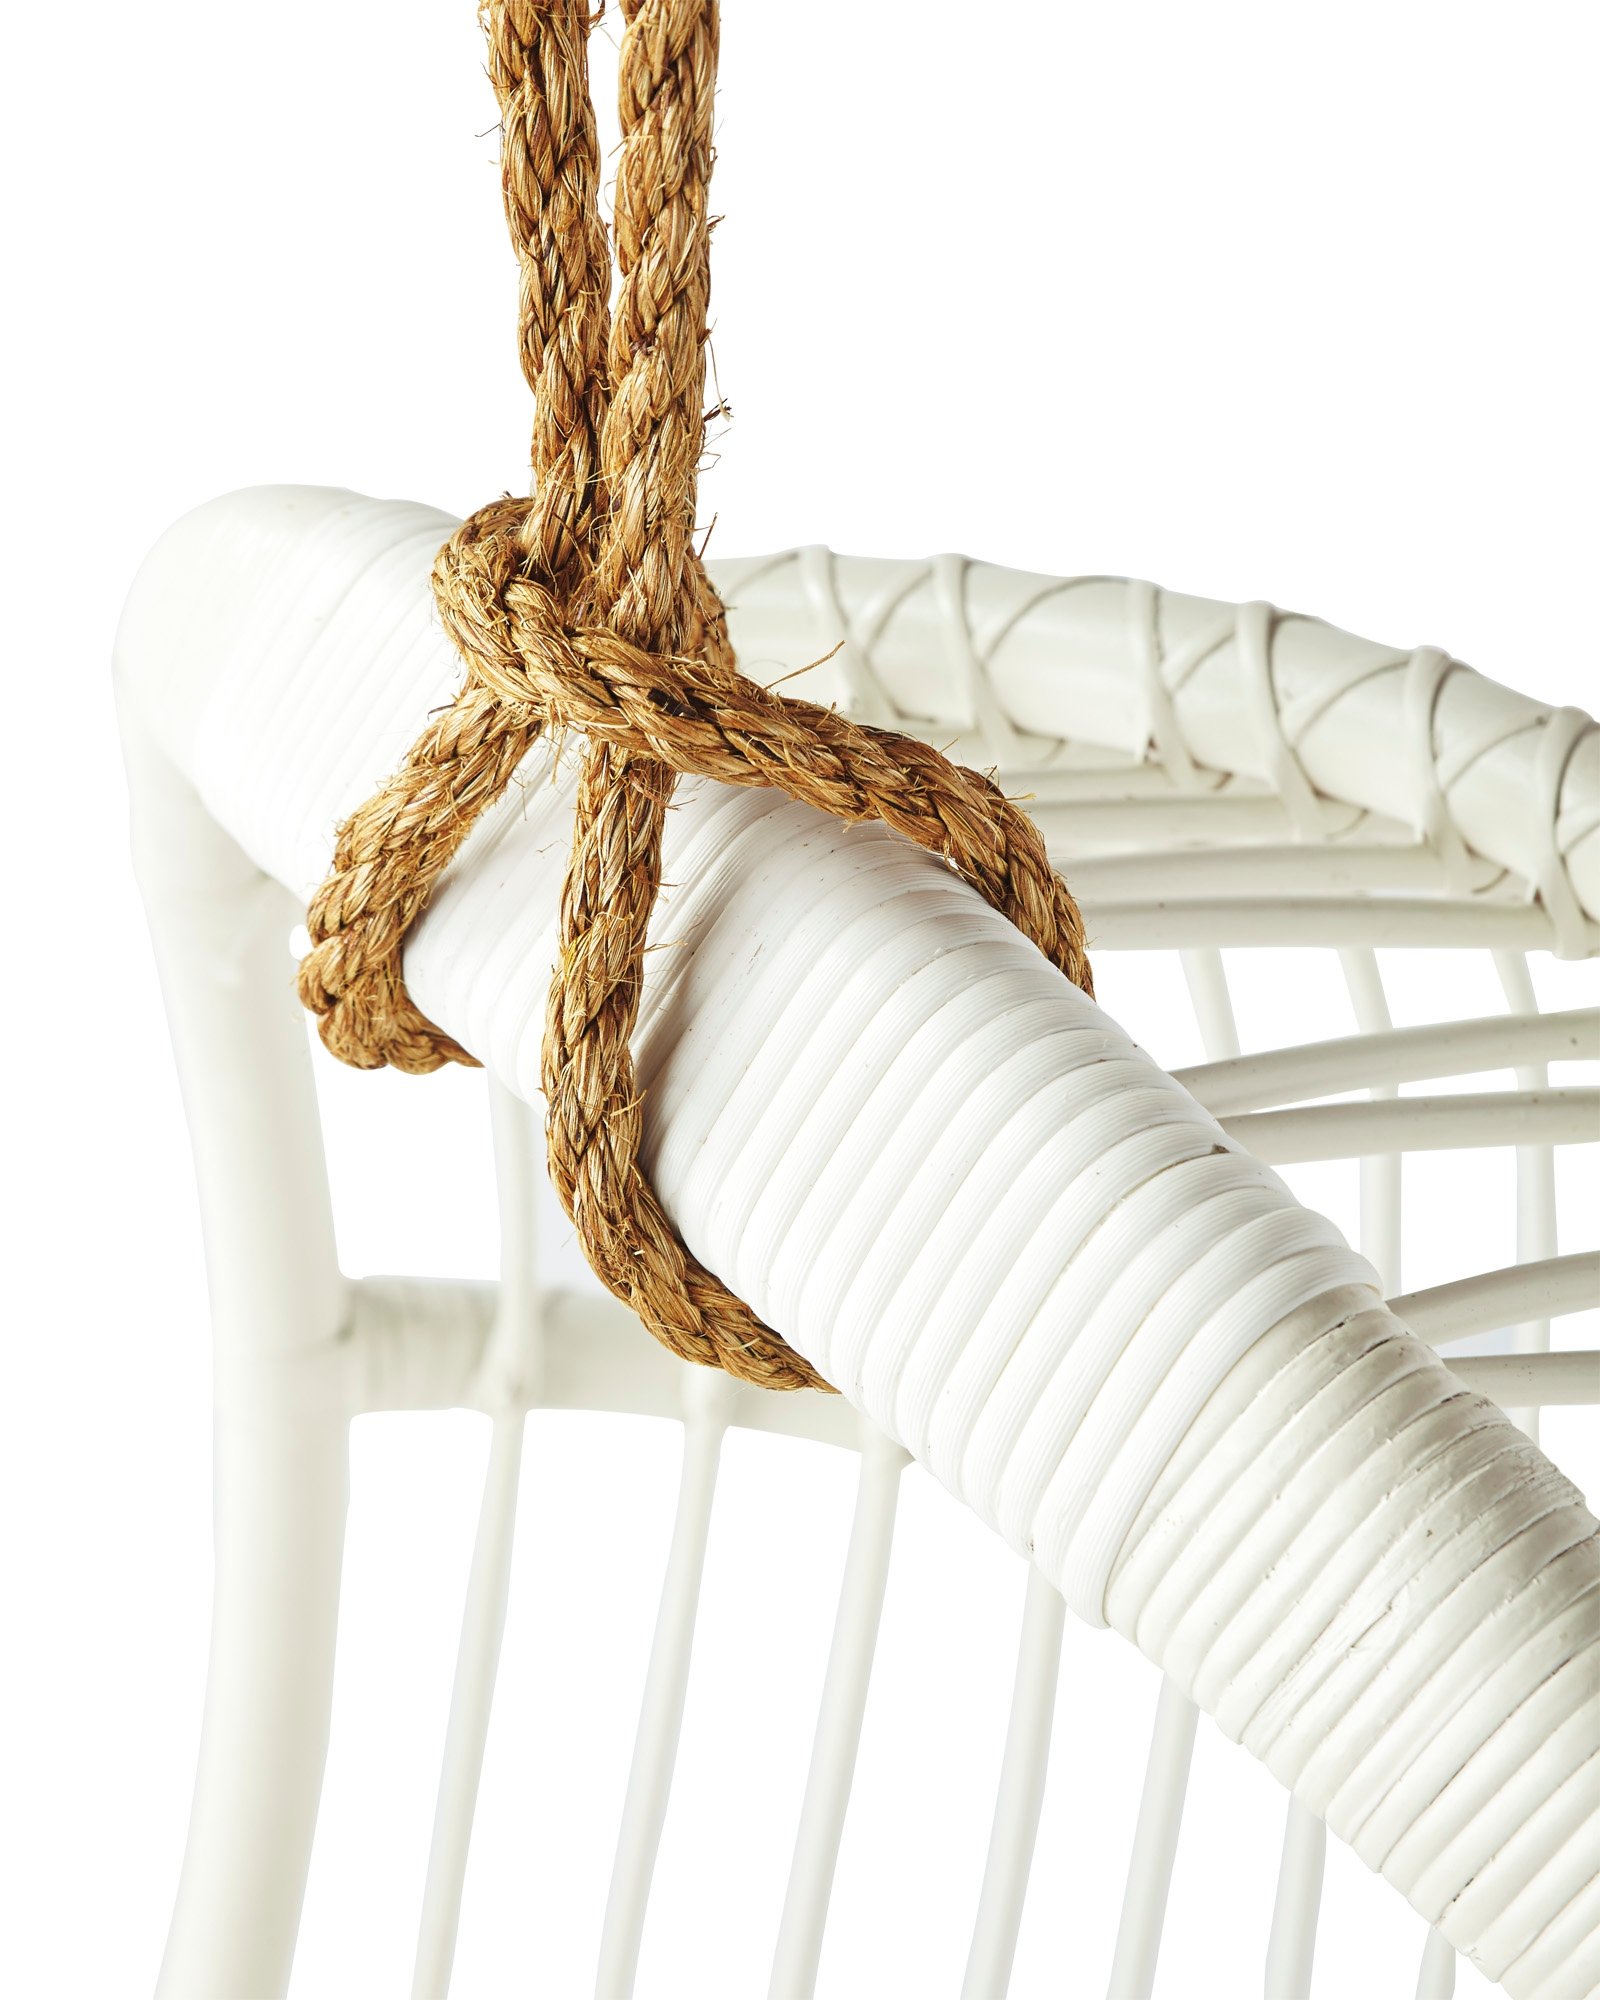 Hanging Rattan Chair - White - Image 4